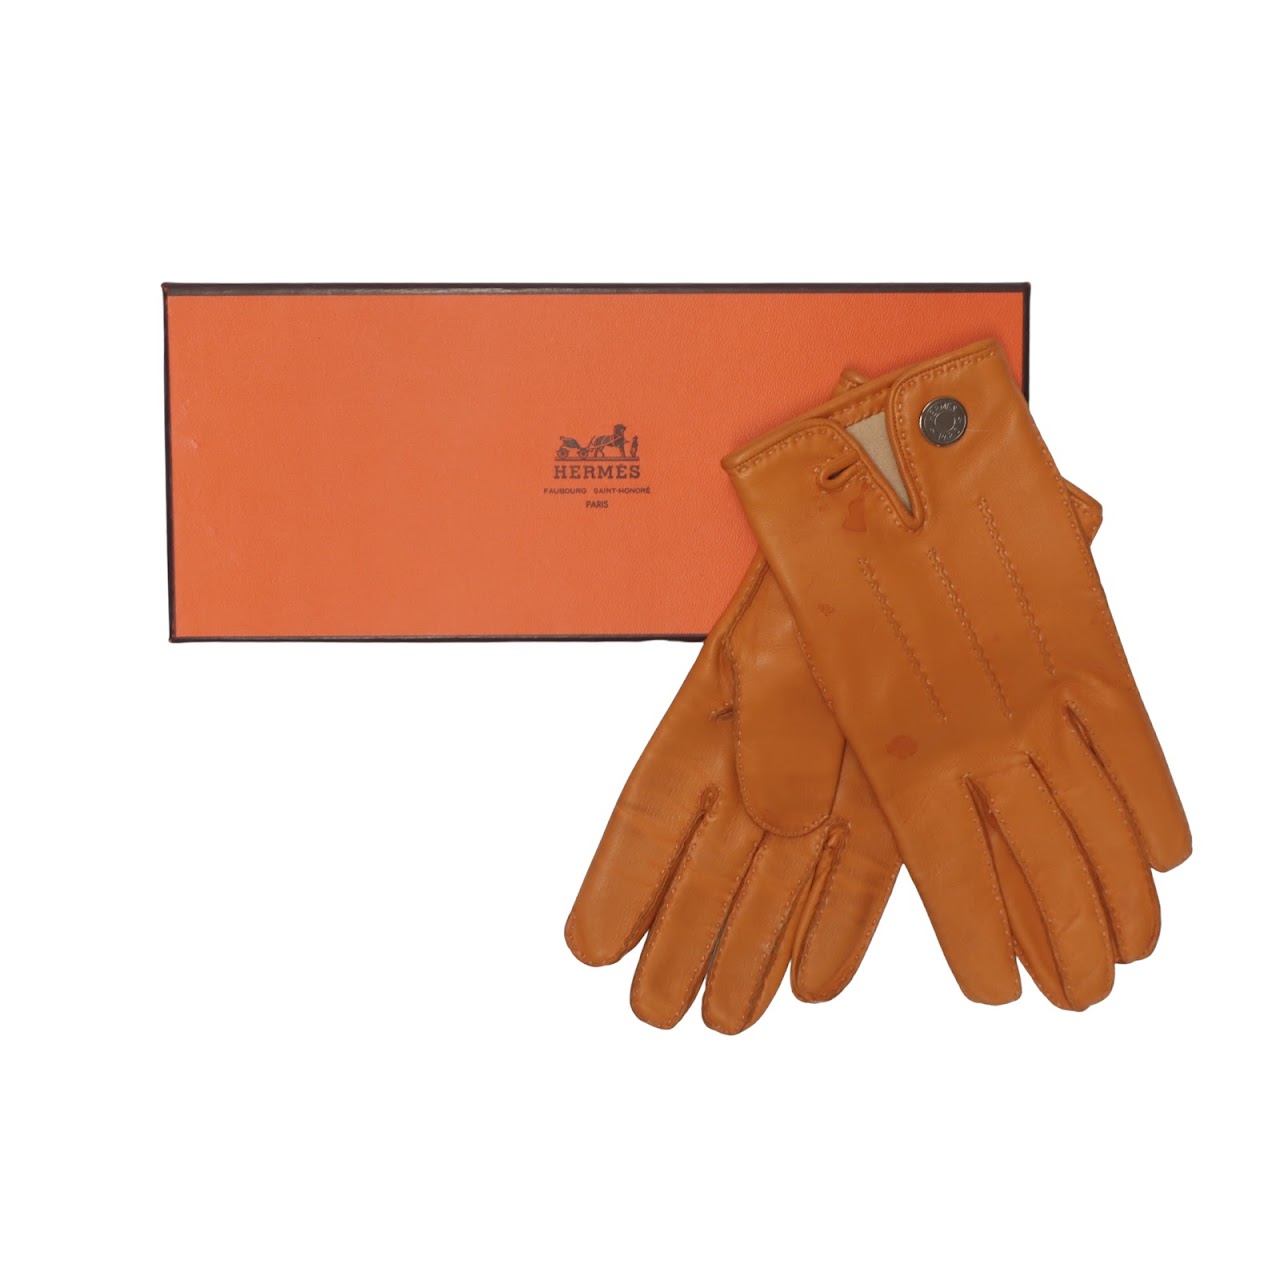 Hermès Lambskin Gloves